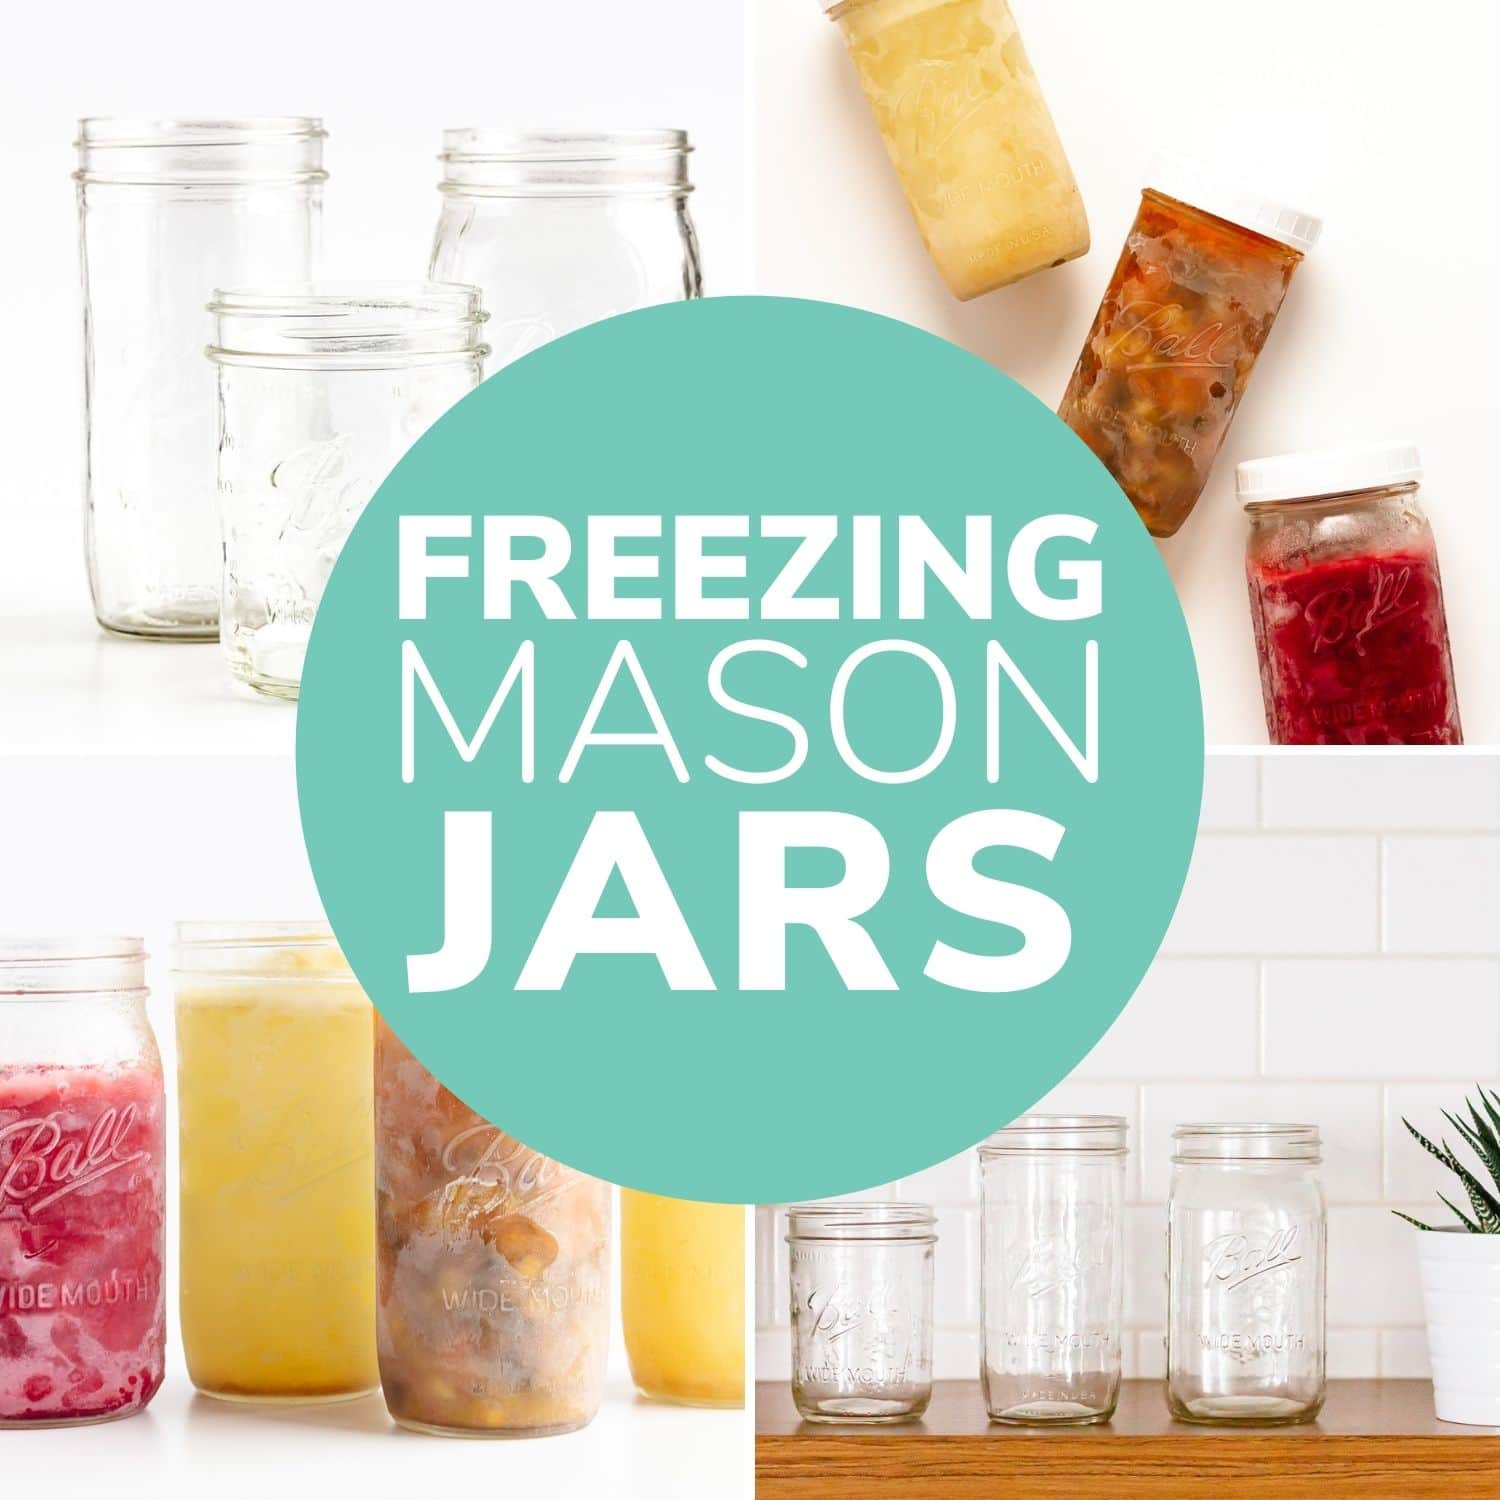 https://www.mapleandmango.com/wp-content/uploads/2021/01/freezing-mason-jars-feature.jpg